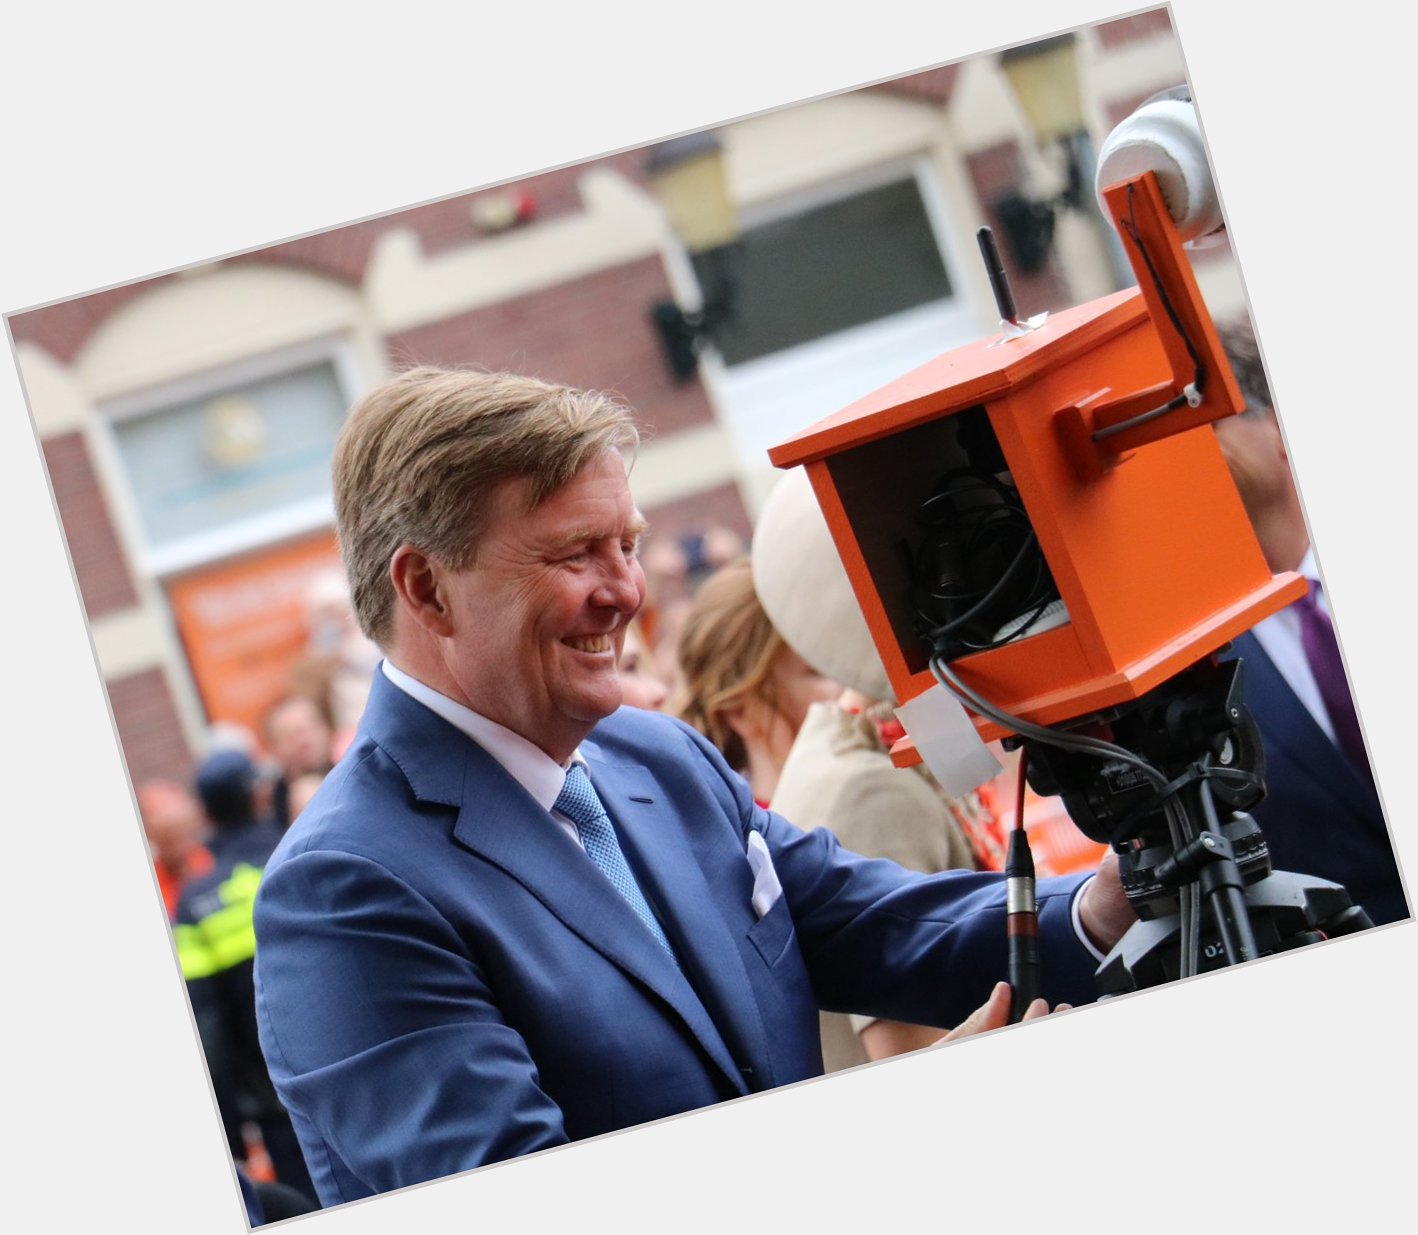 King Willem-Alexander of the Netherlands celebrates his birthday today. Happy birthday!

Photo: Royal News 